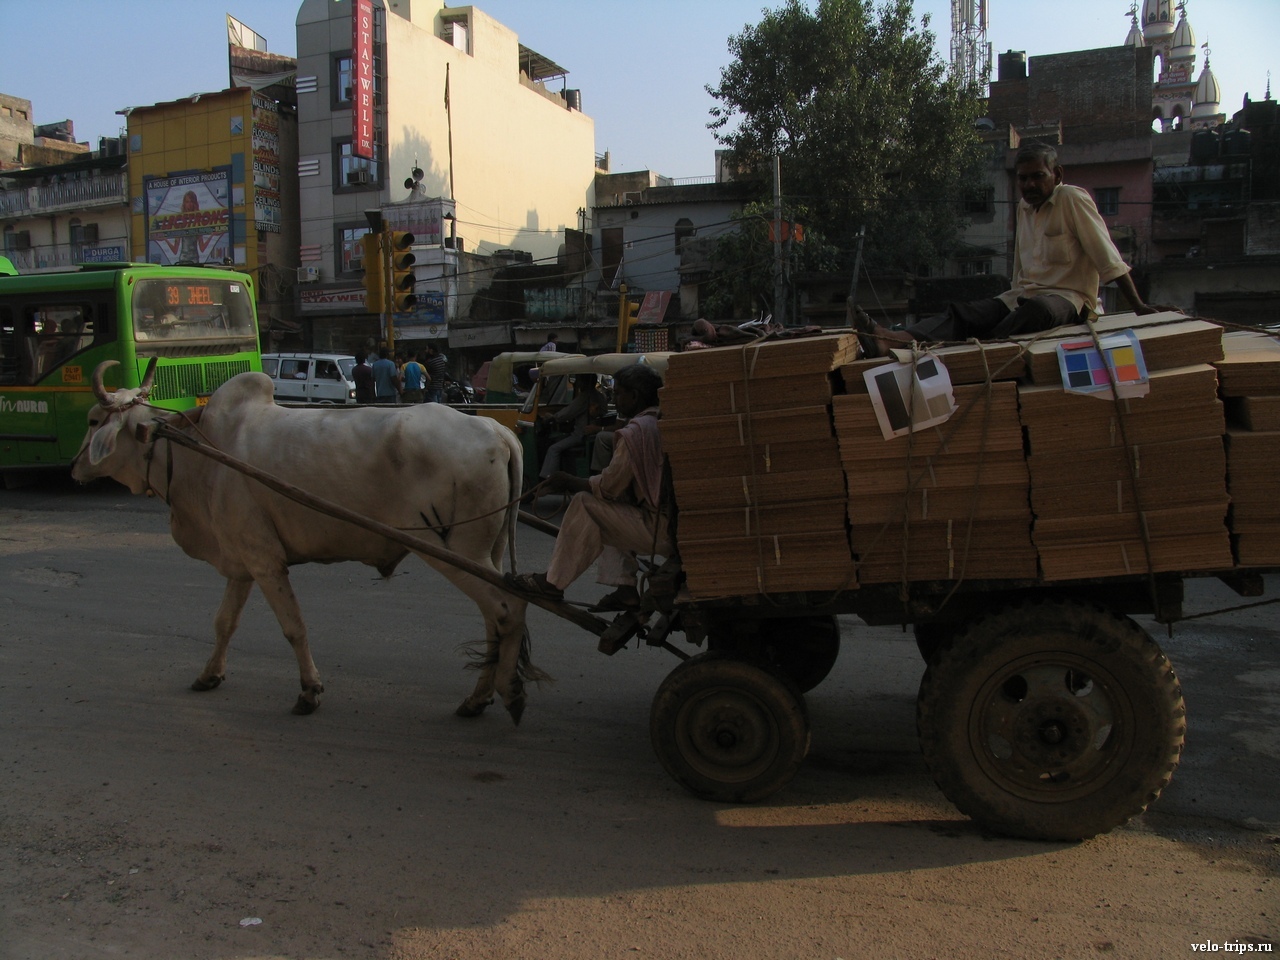 Bull cart on Delhi streets, India